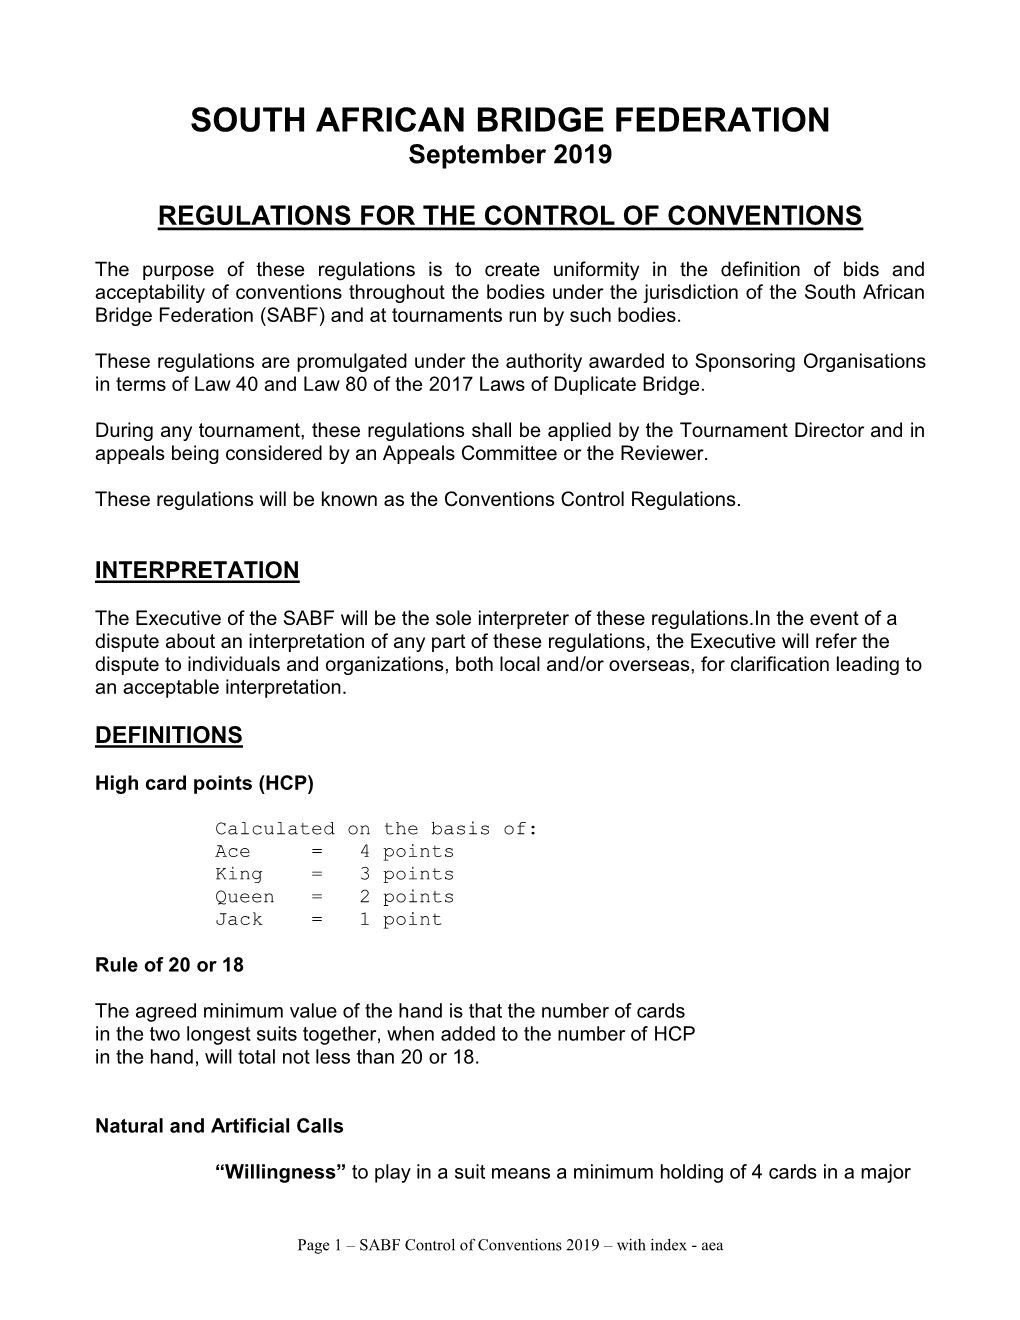 Conventions Control Regulations